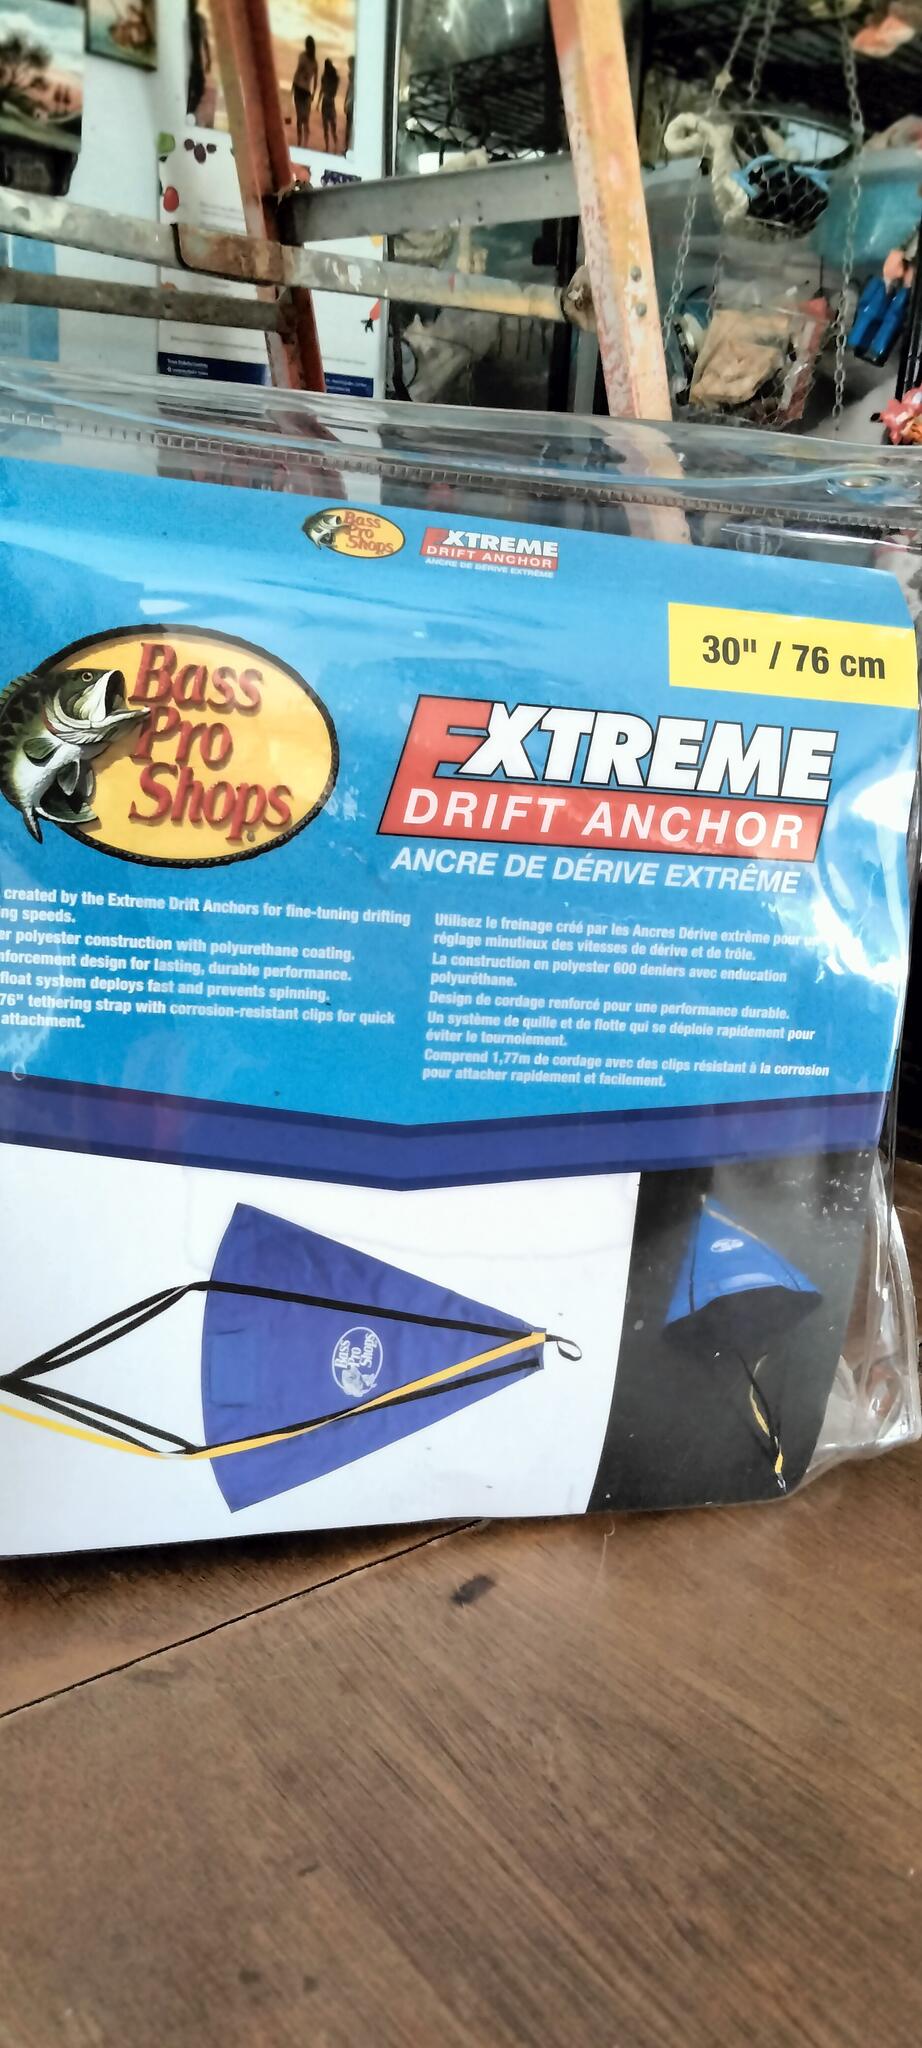 Extreme Drift Anchor For $30 In San Antonio, TX